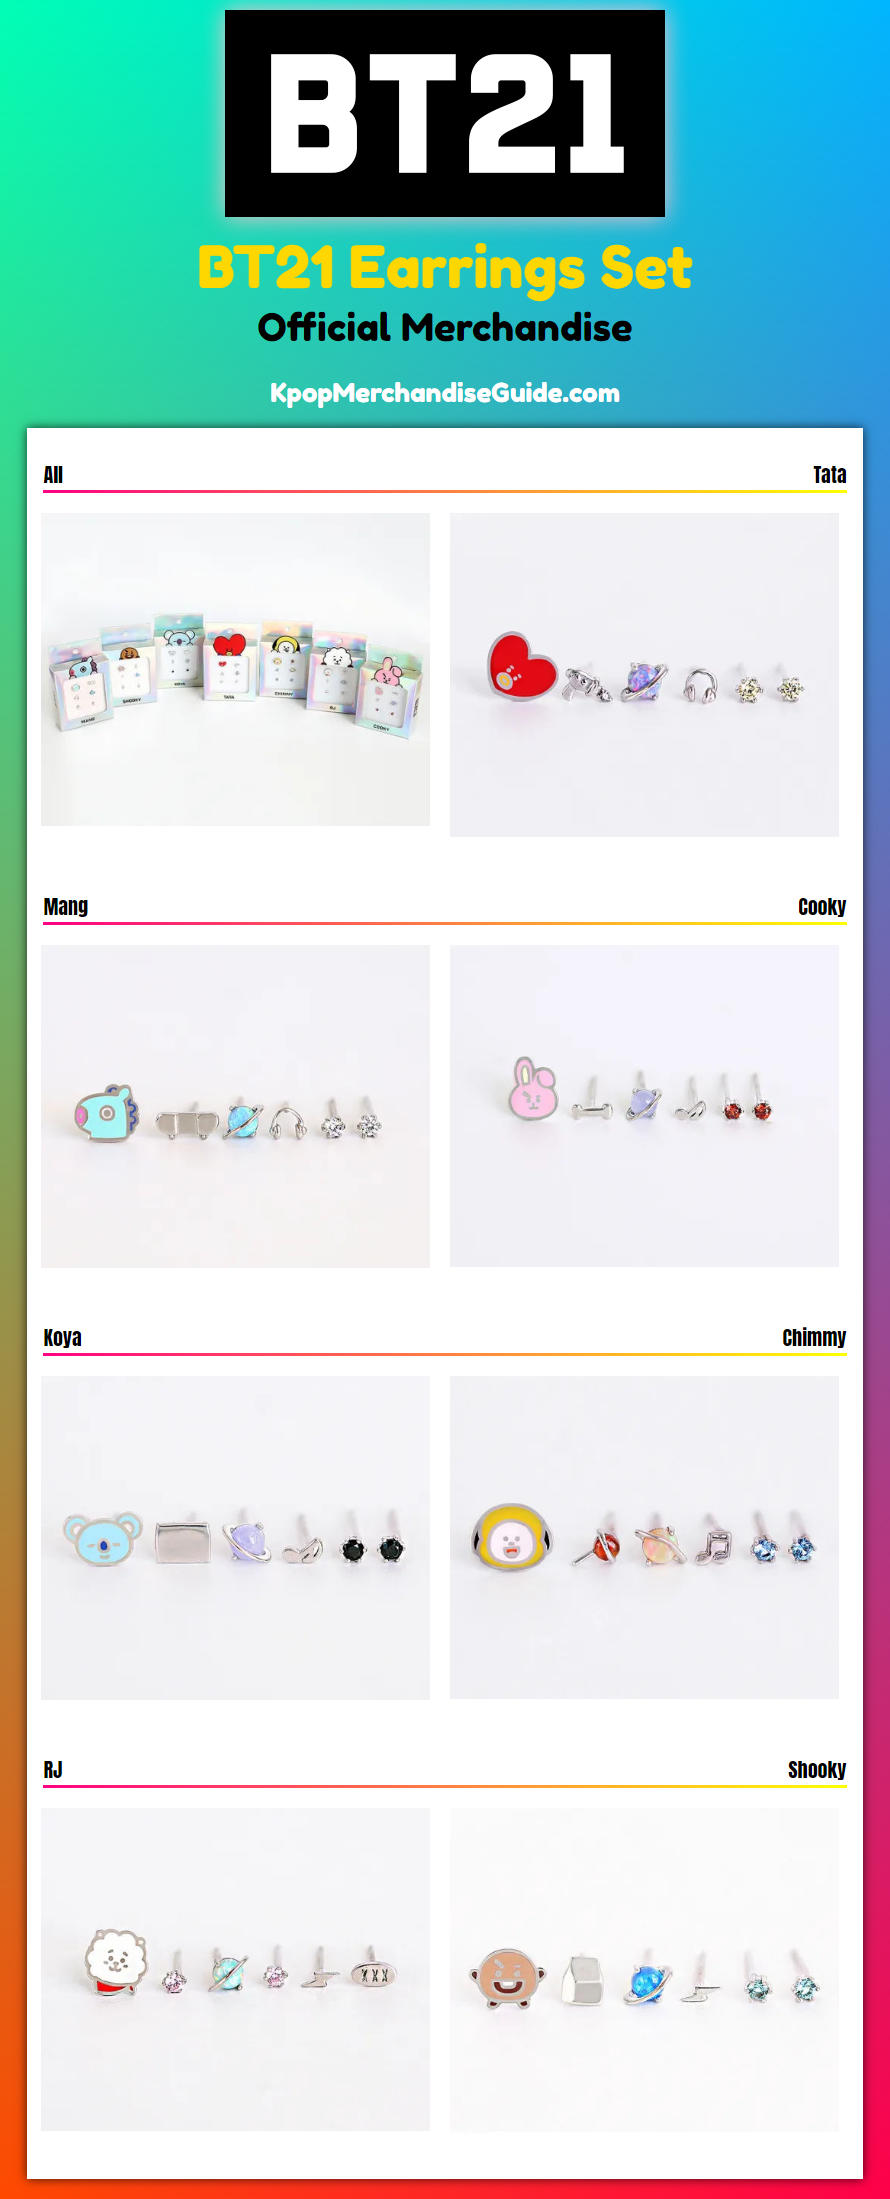 BTS Gifts - BT21 Earrings Set